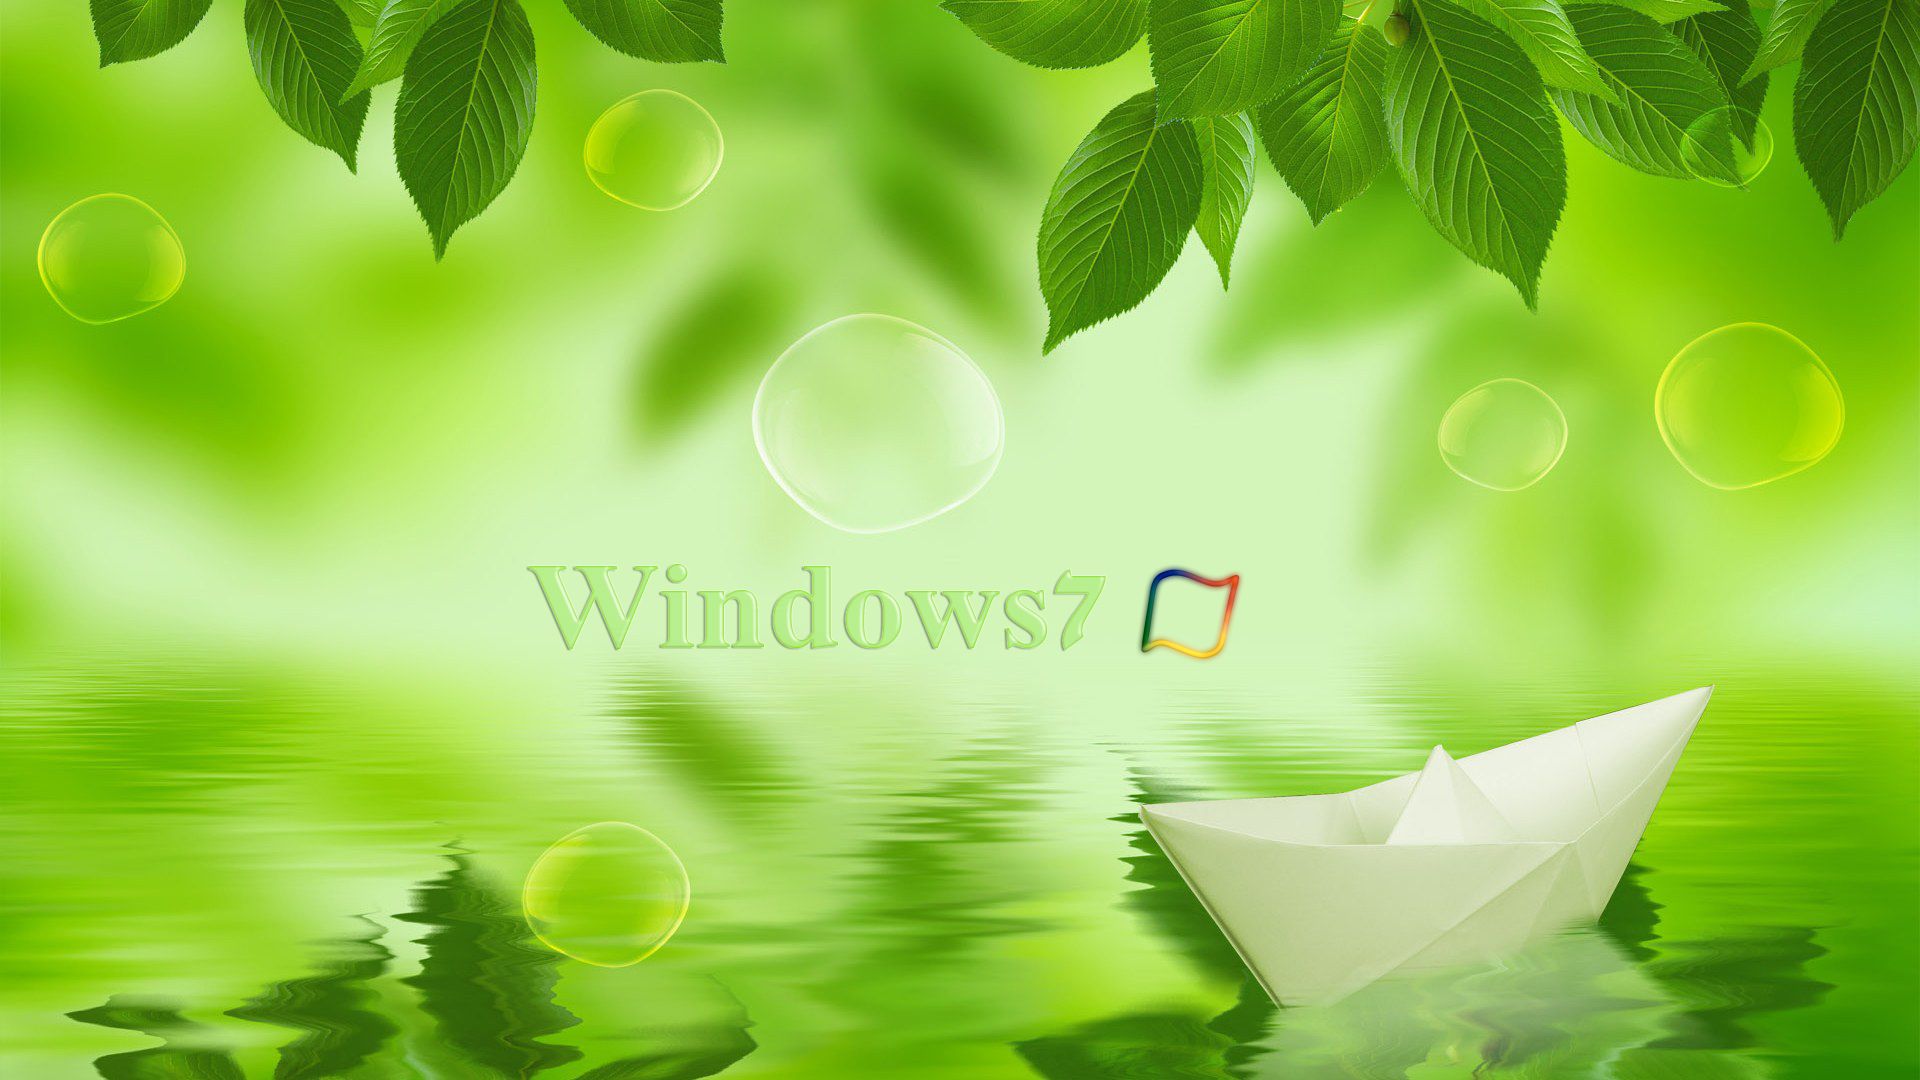 Windows7 green Wallpaper by kubines on DeviantArt